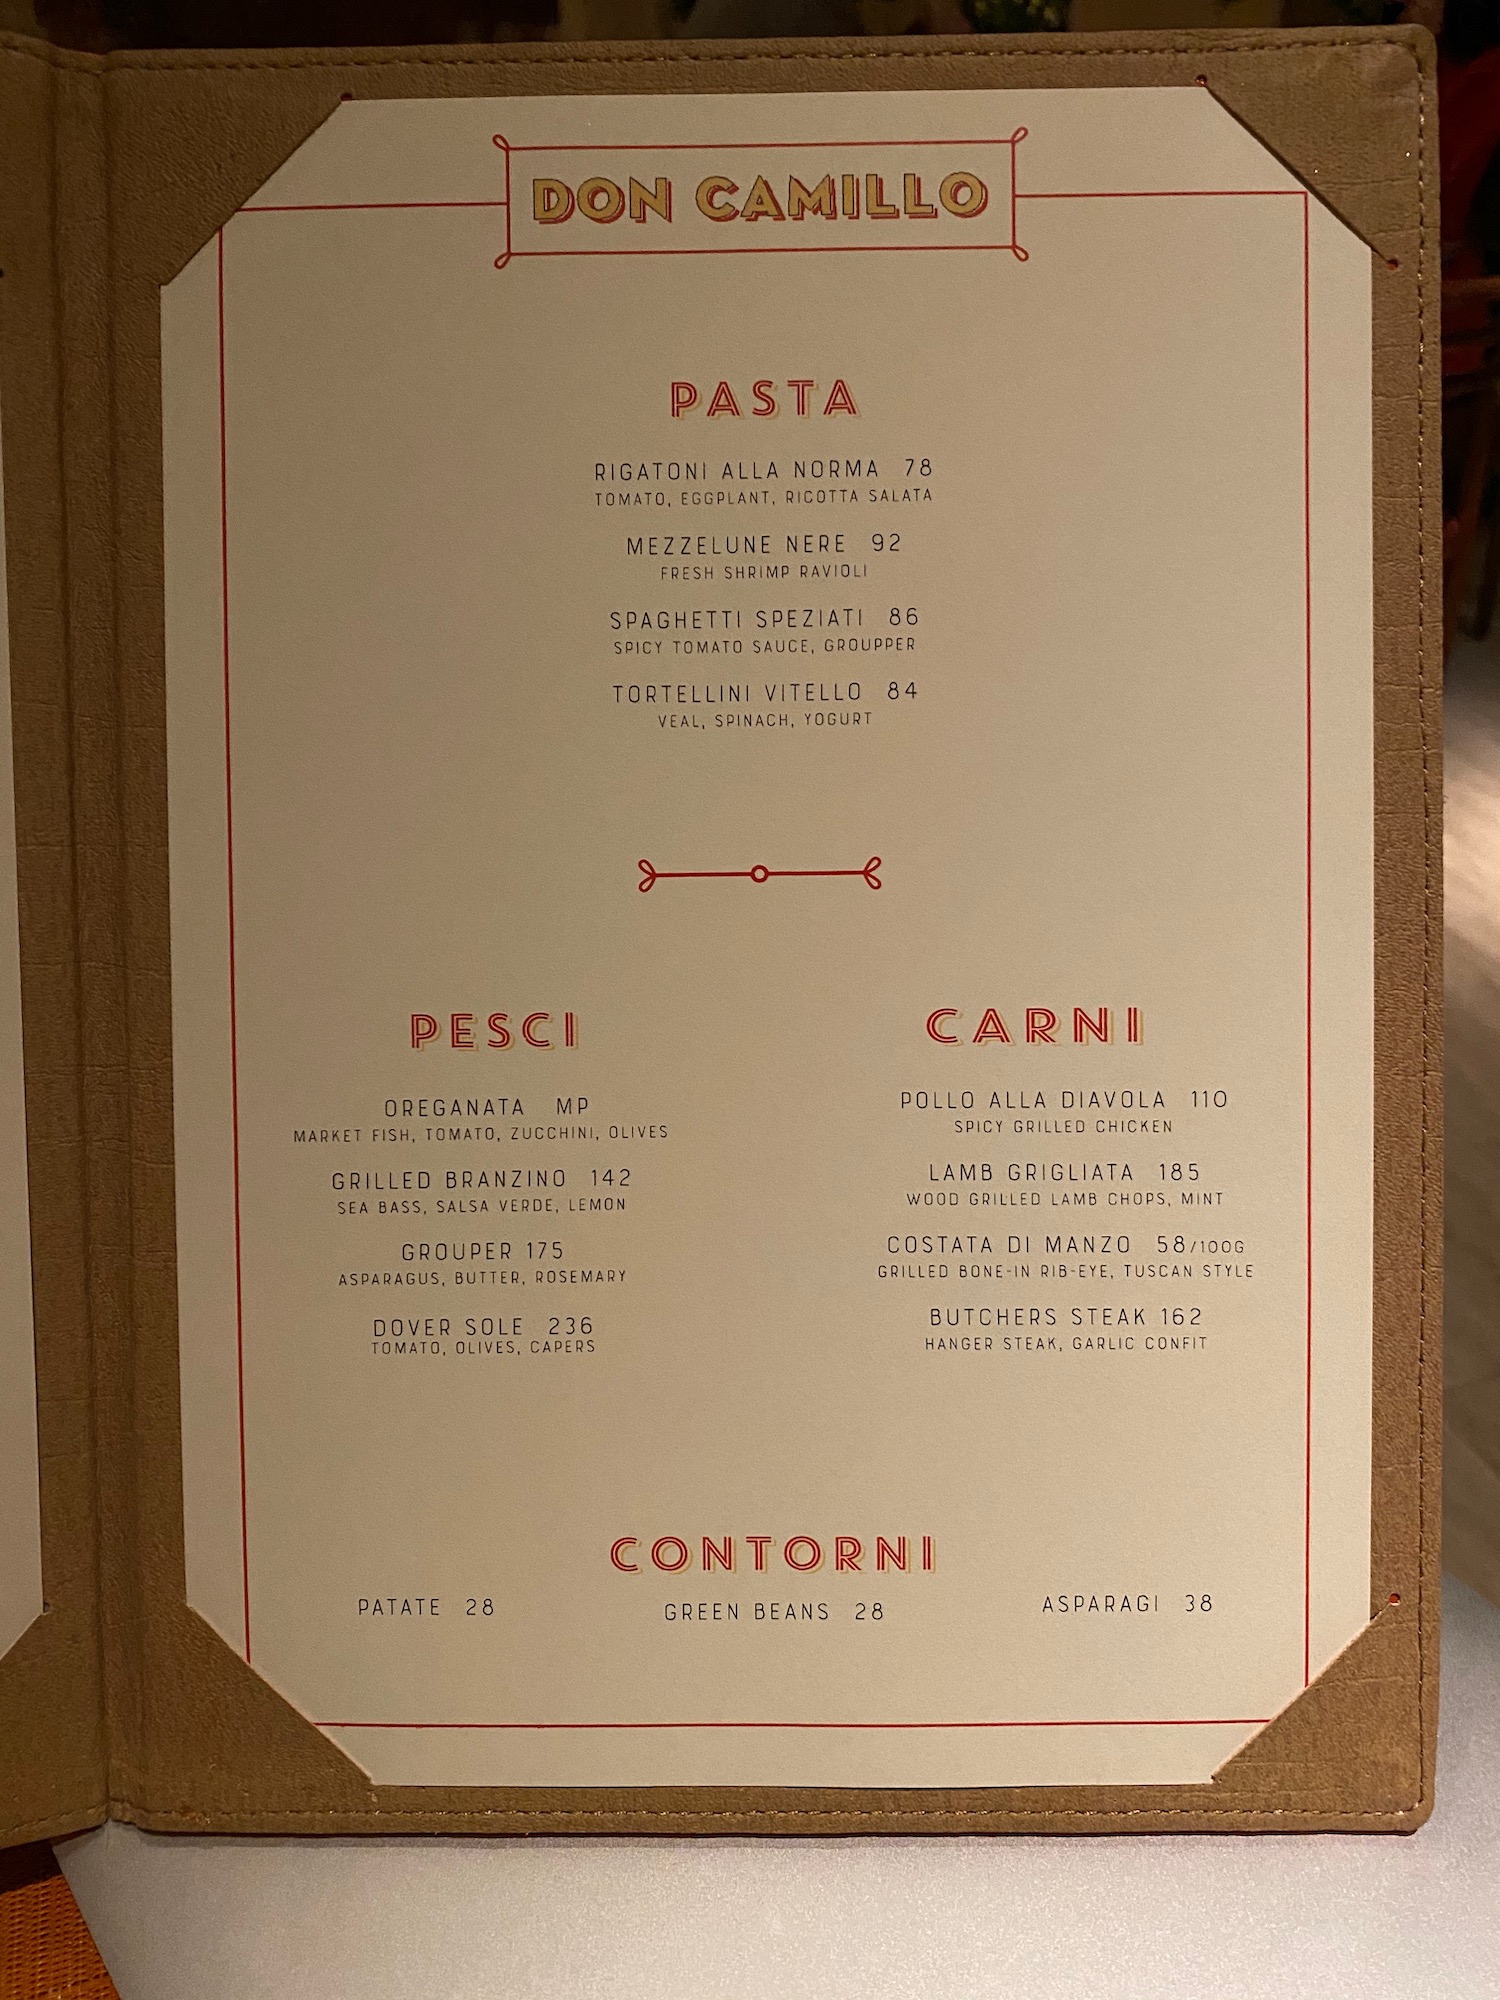 a menu on a cardboard box